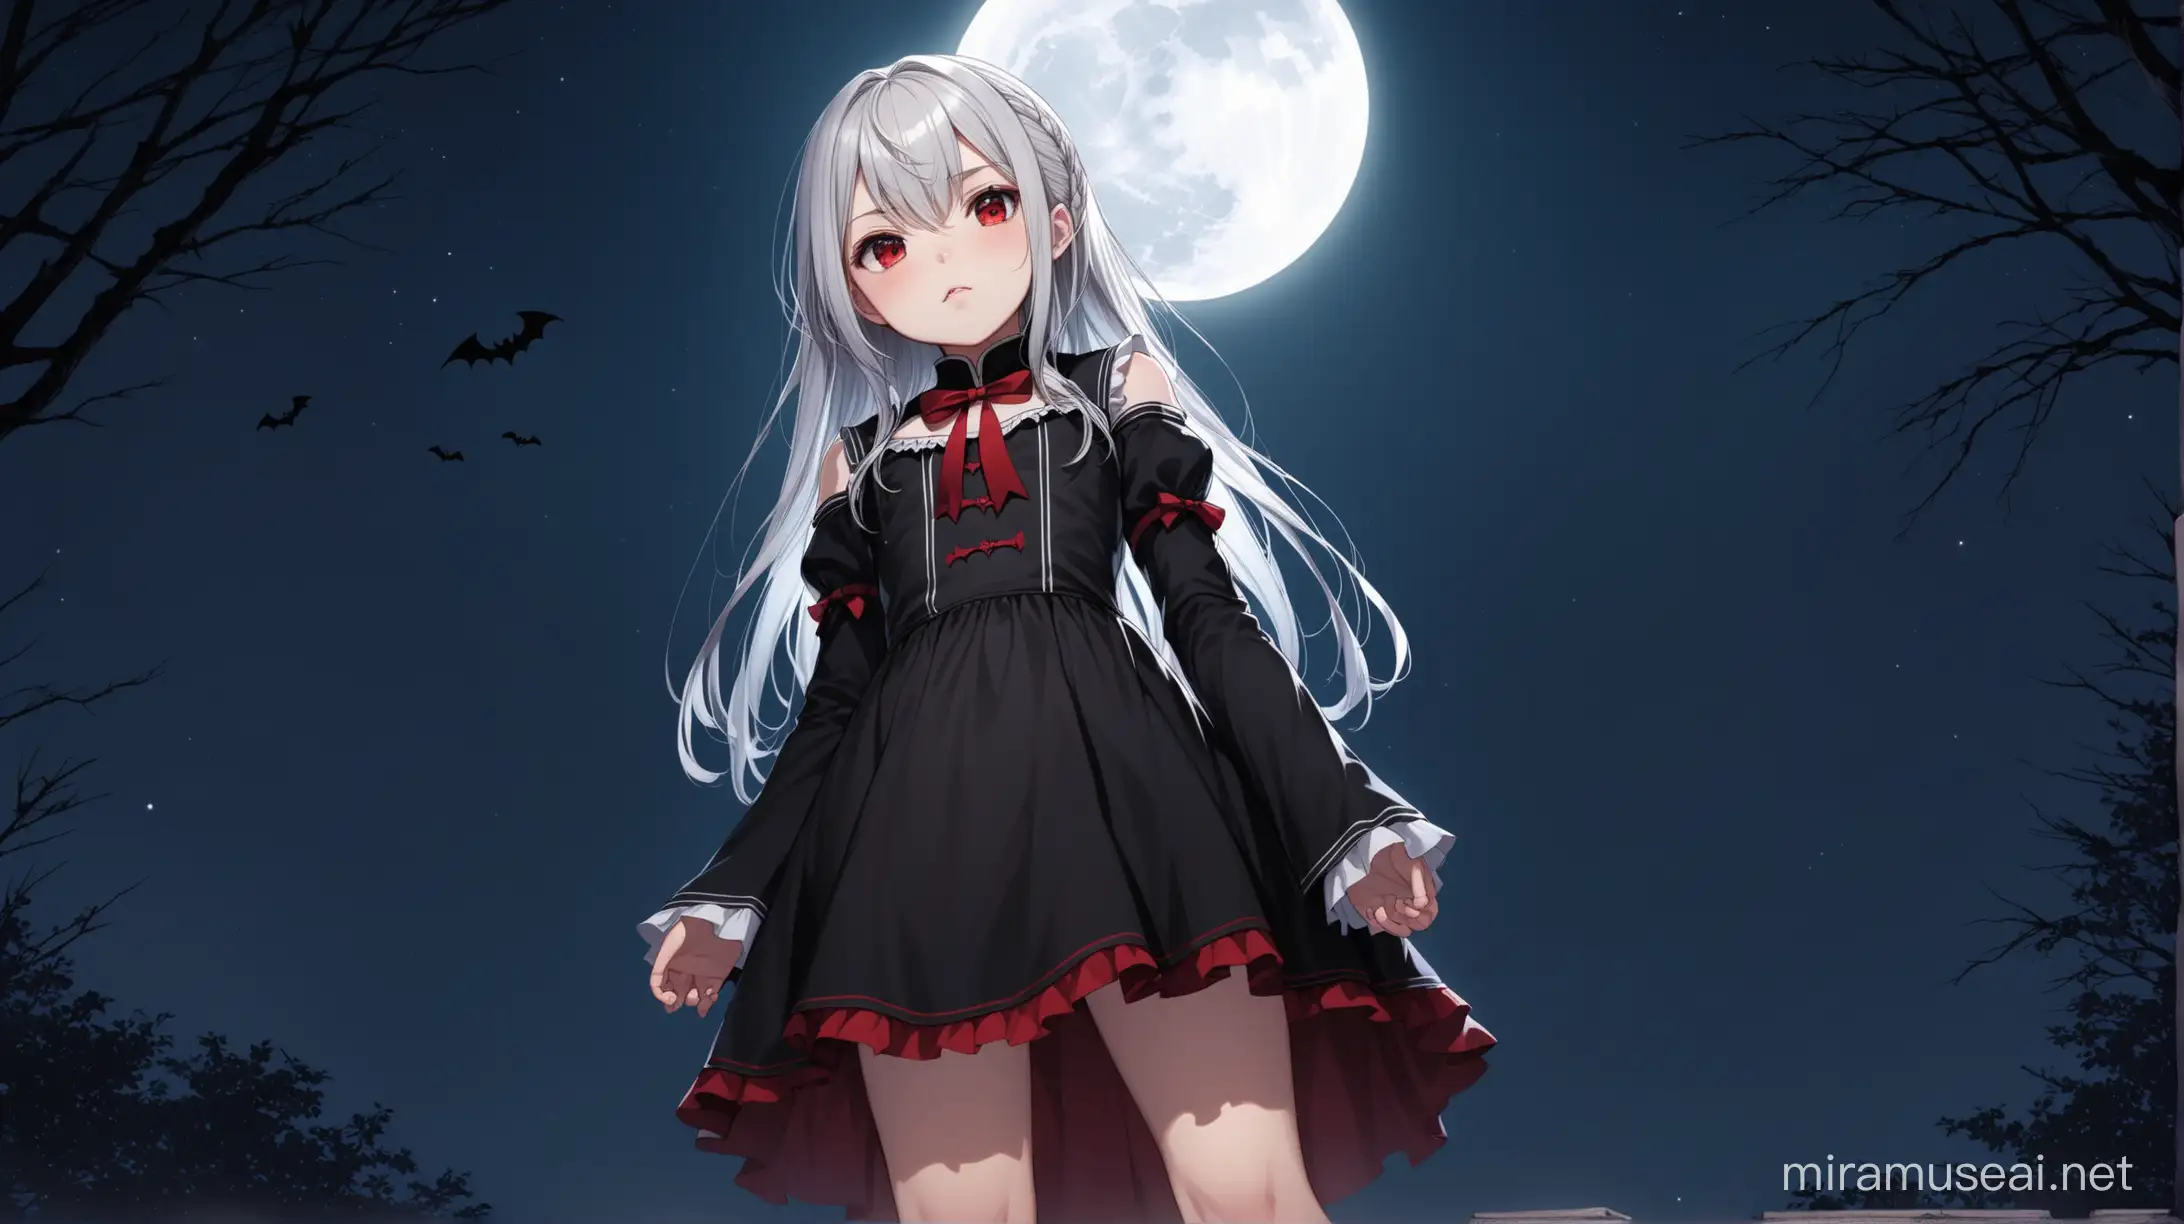 Stoic Vampire Girl Kei Shirogane Under Full Moonlight